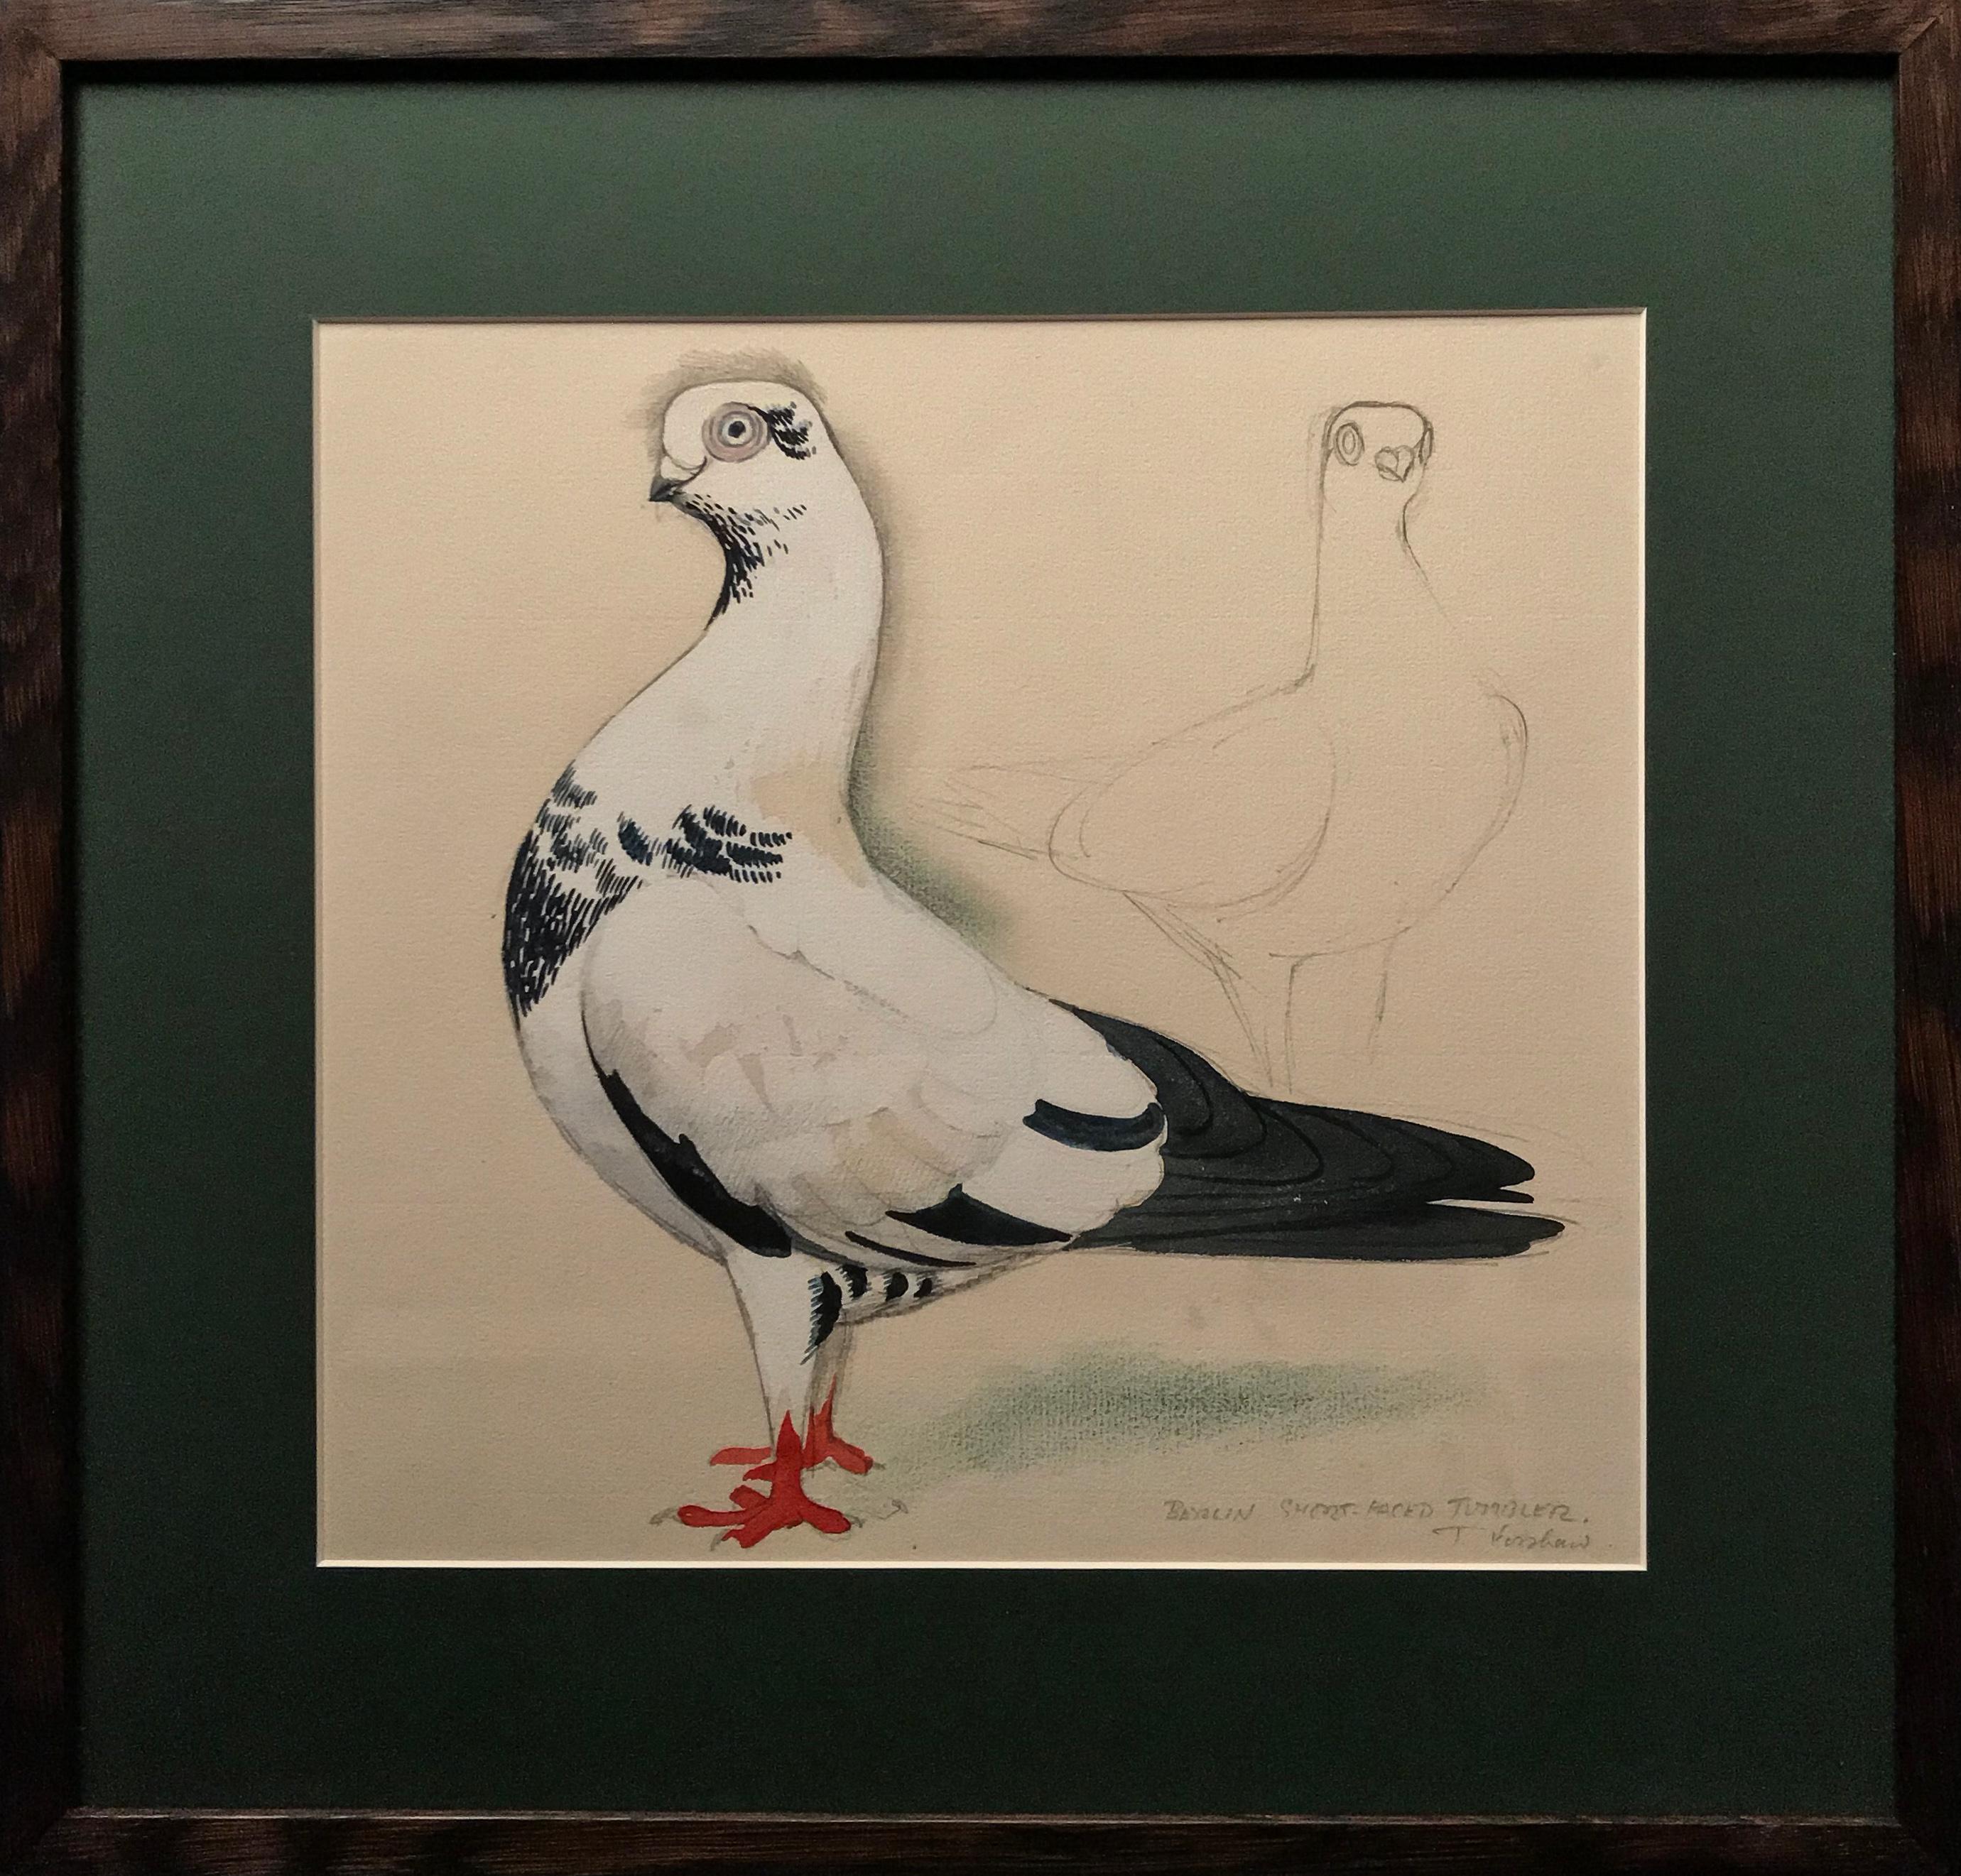 A Berlin short-faced tumber pigeon